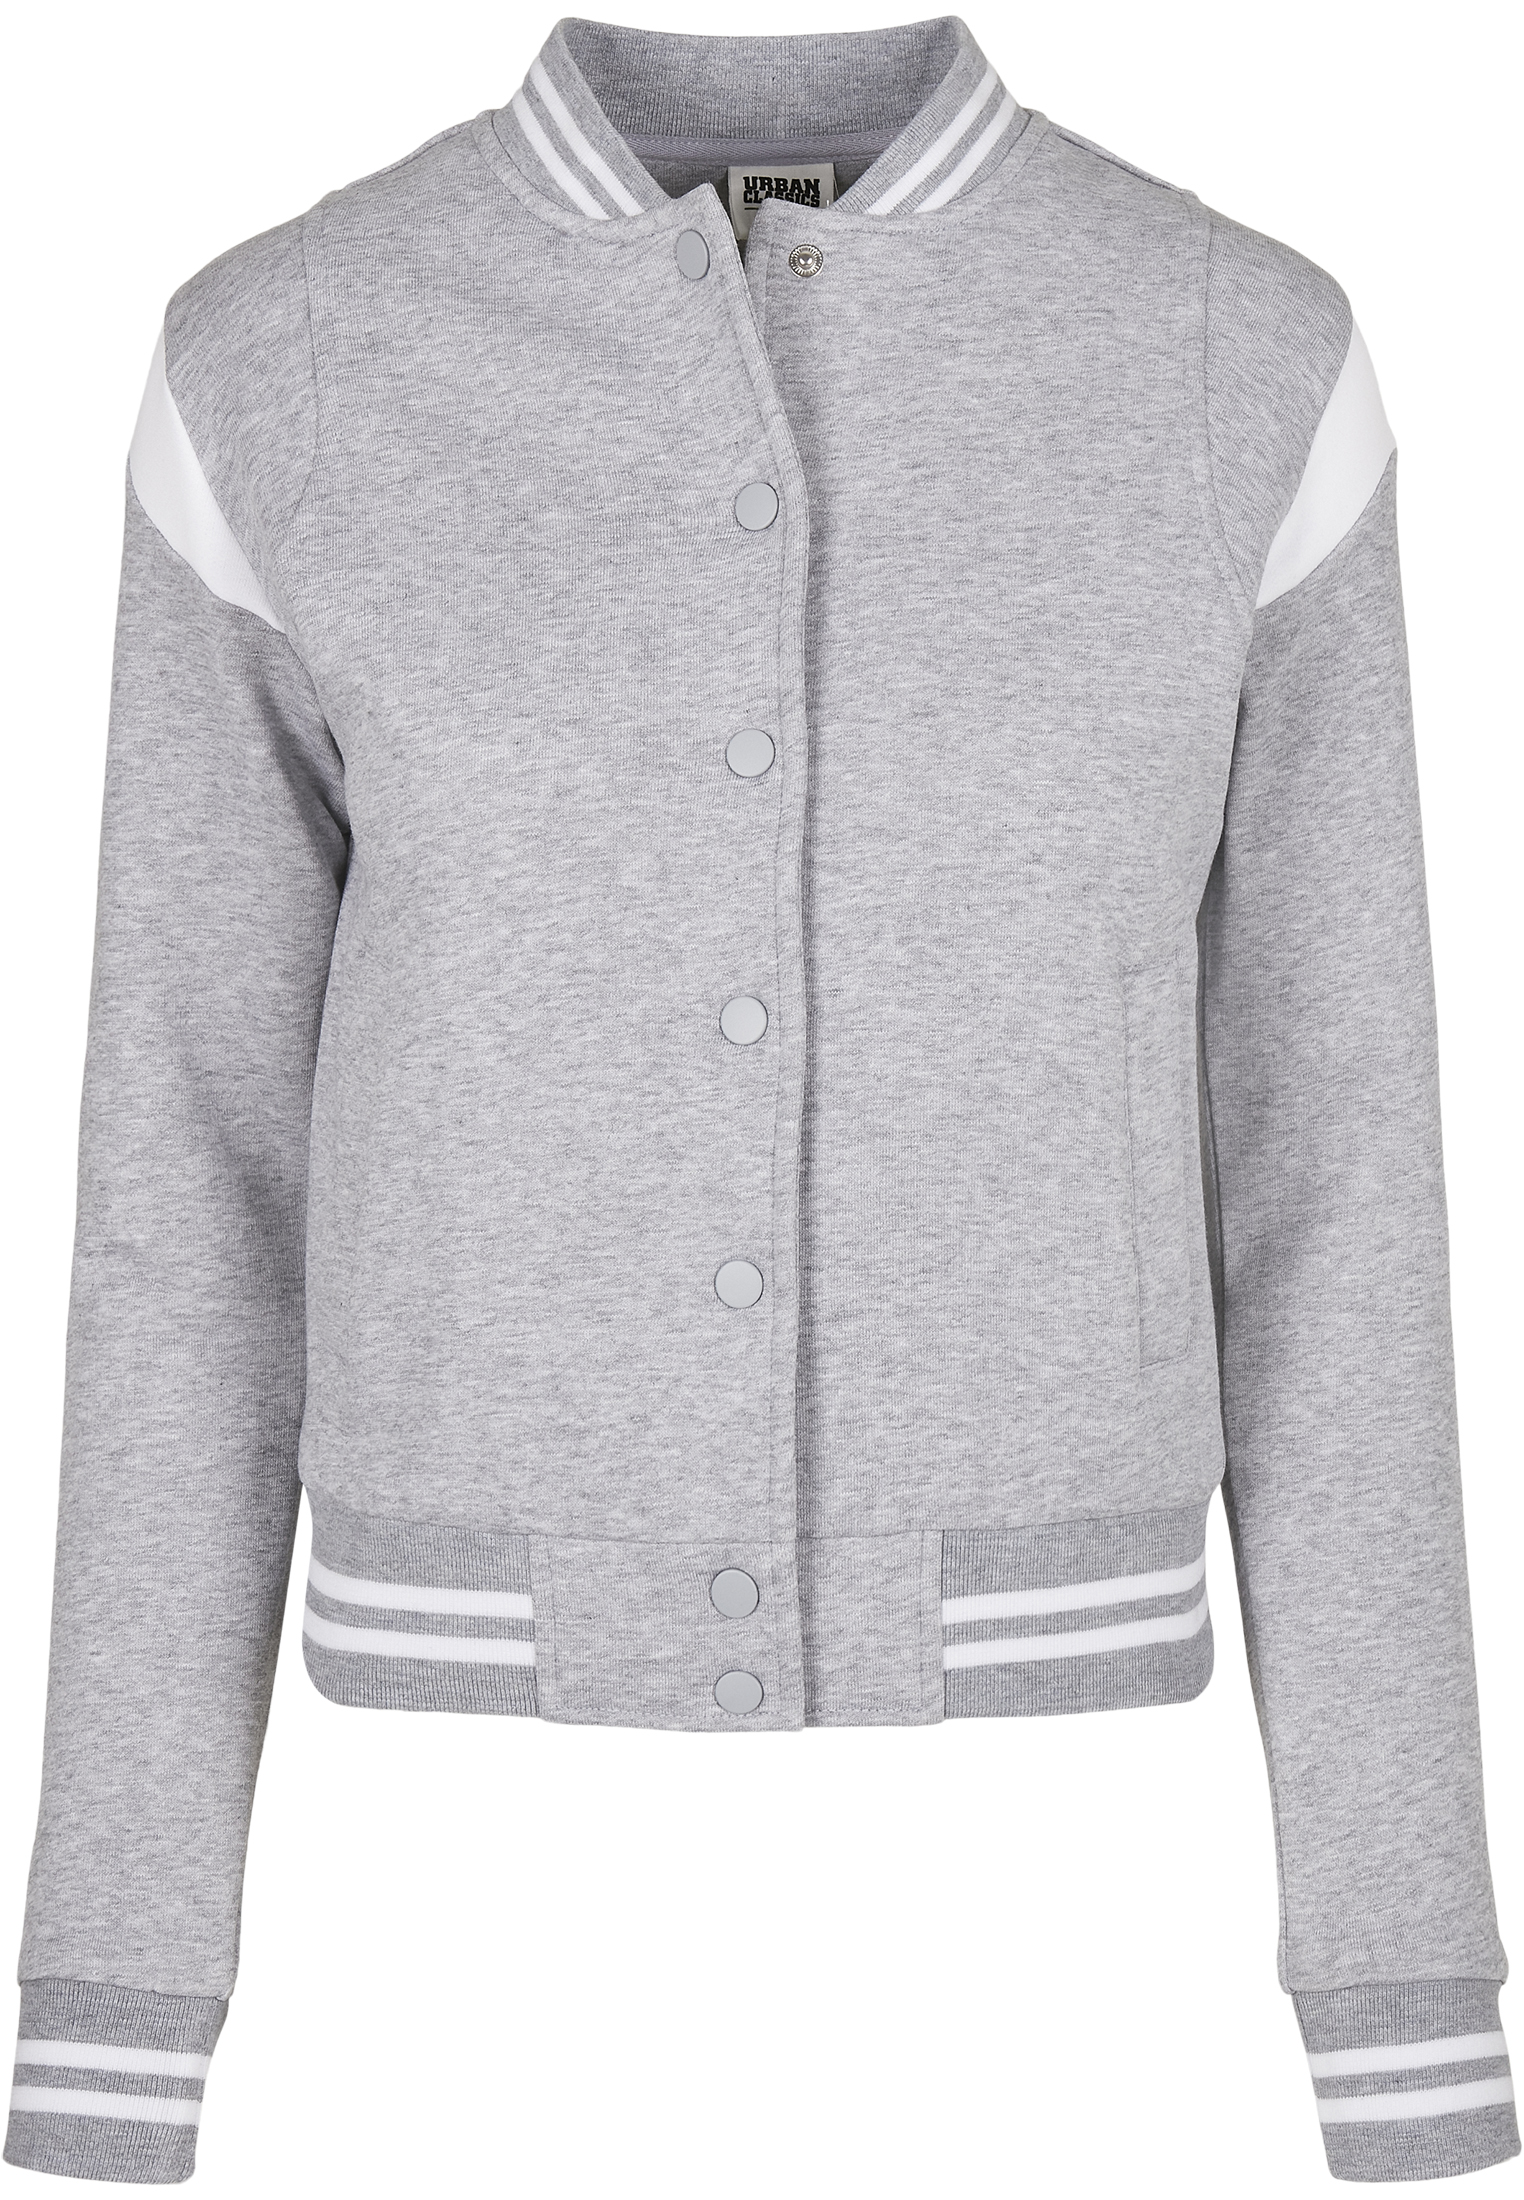 Nachhaltig Ladies Organic Inset College Sweat Jacket in Farbe grey/white